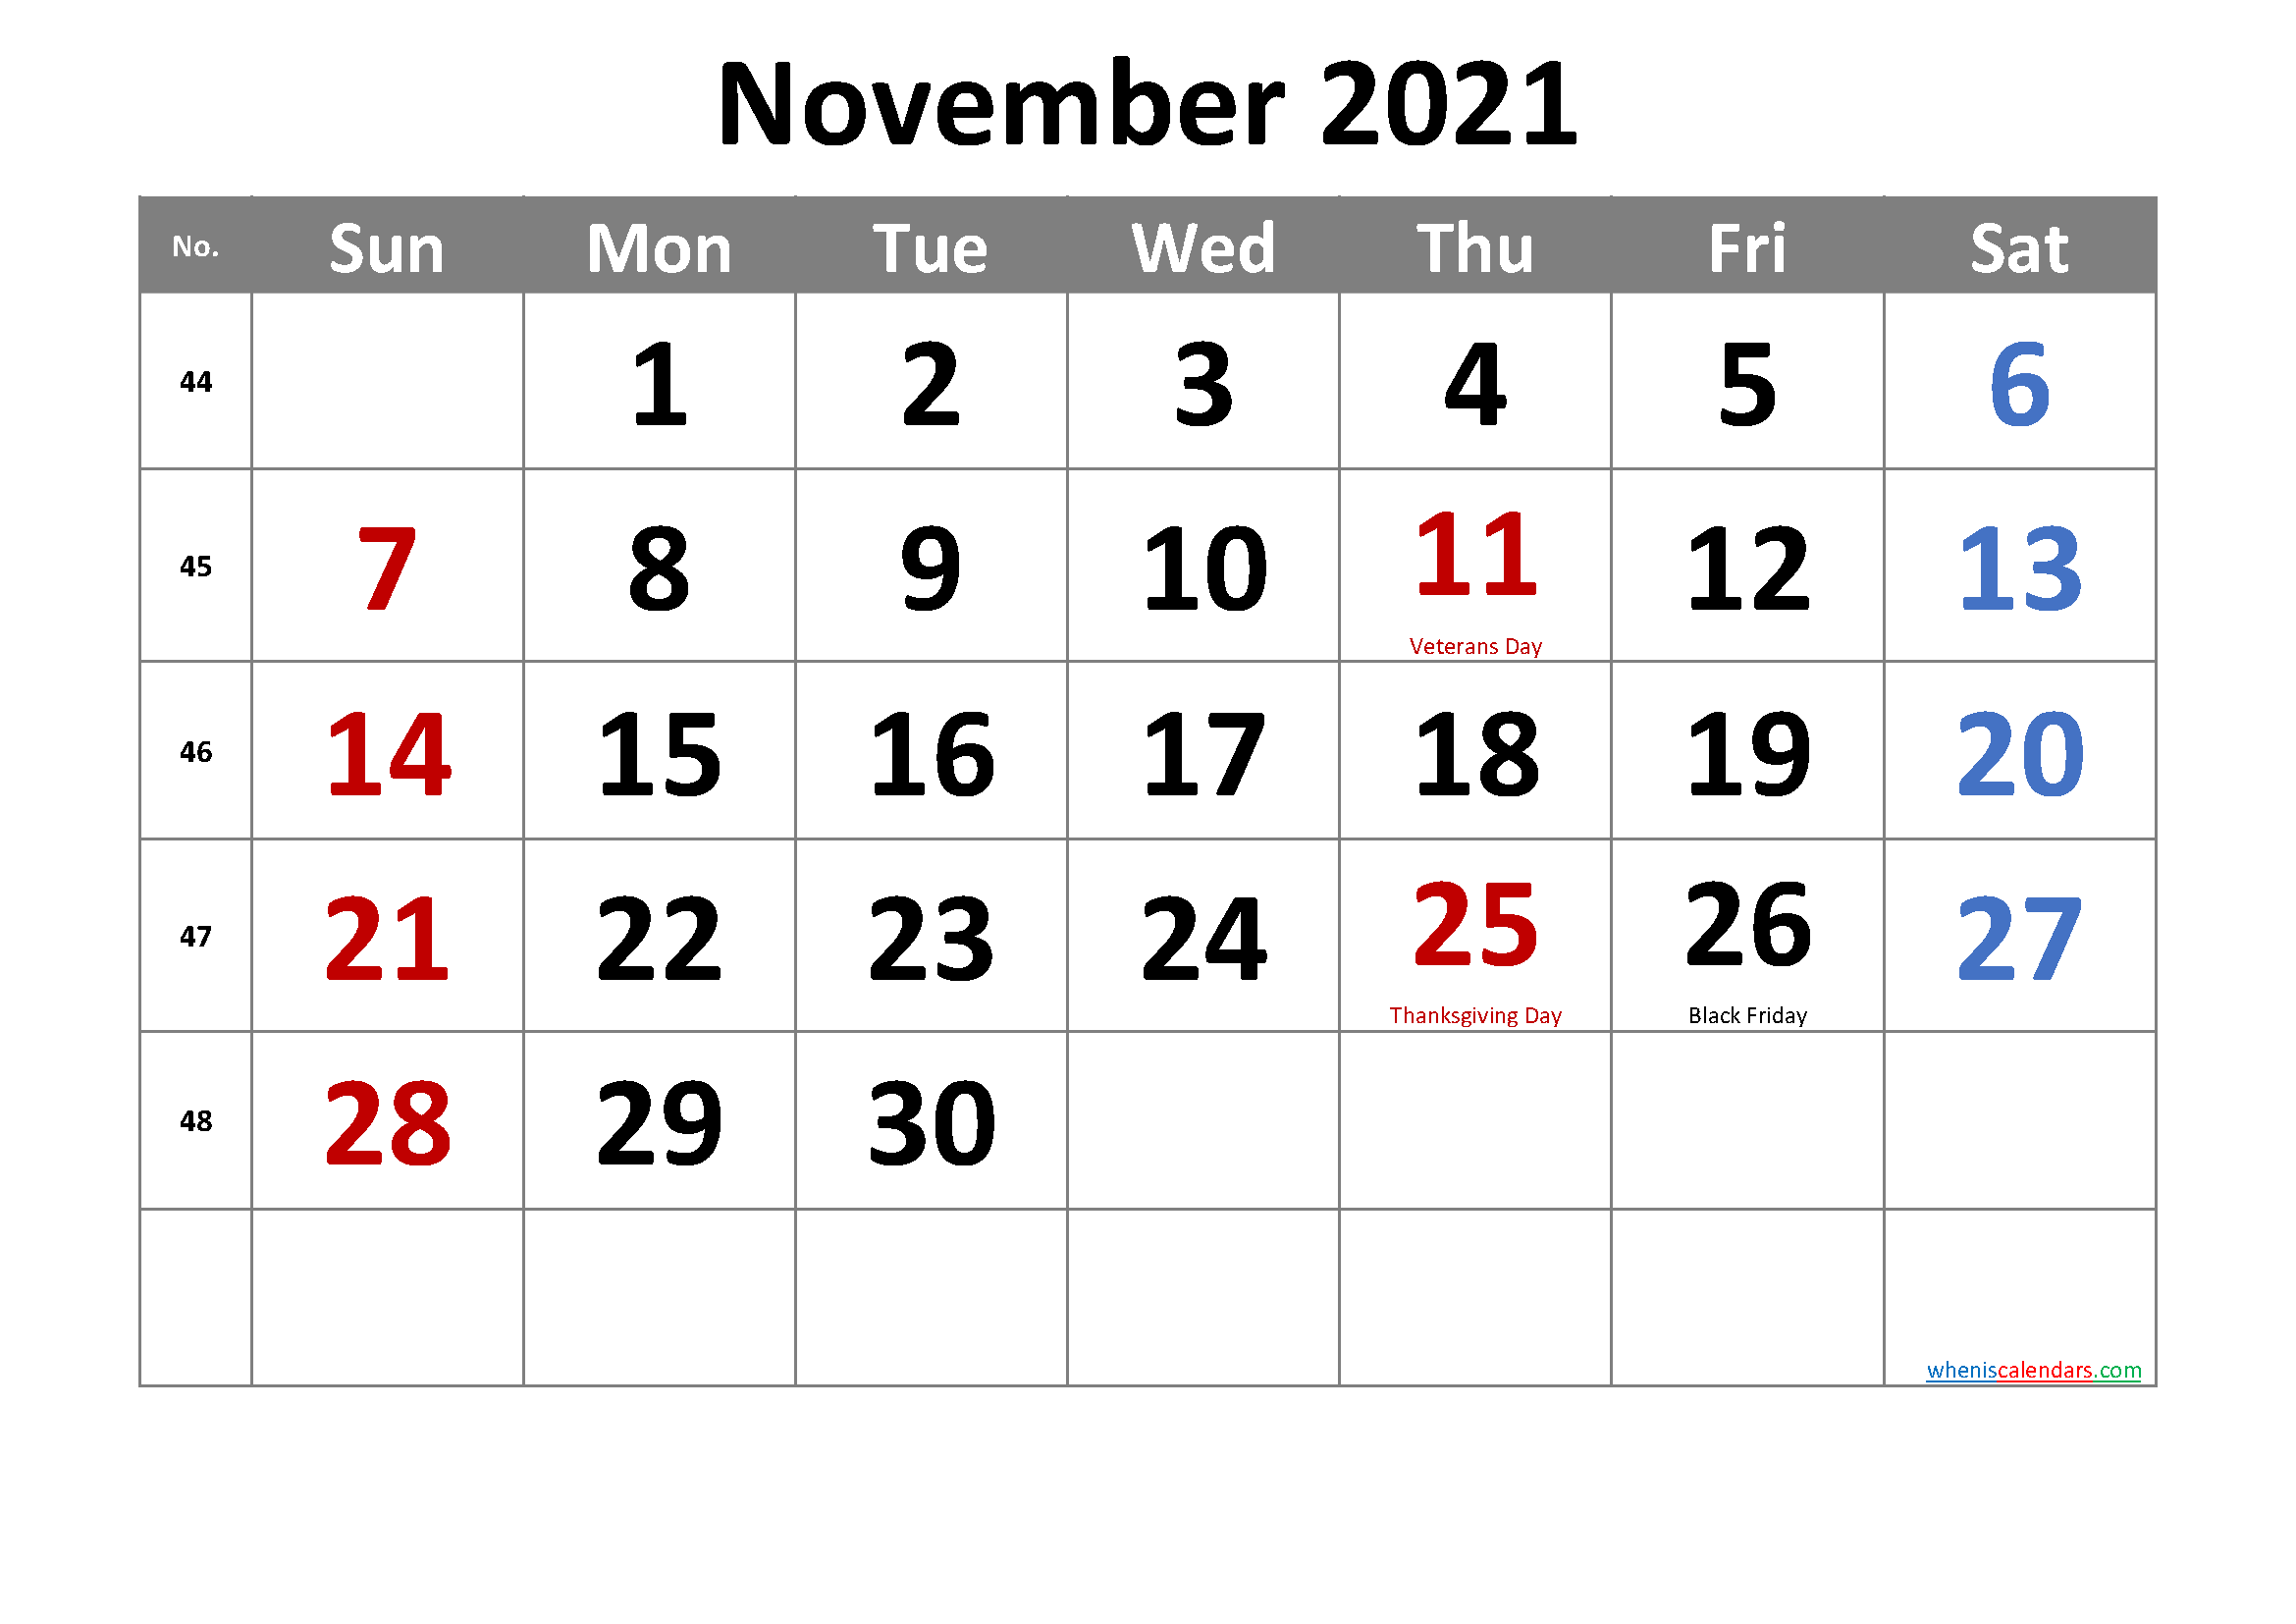 November 2021 Free Printable Calendar Template Nocr21m11